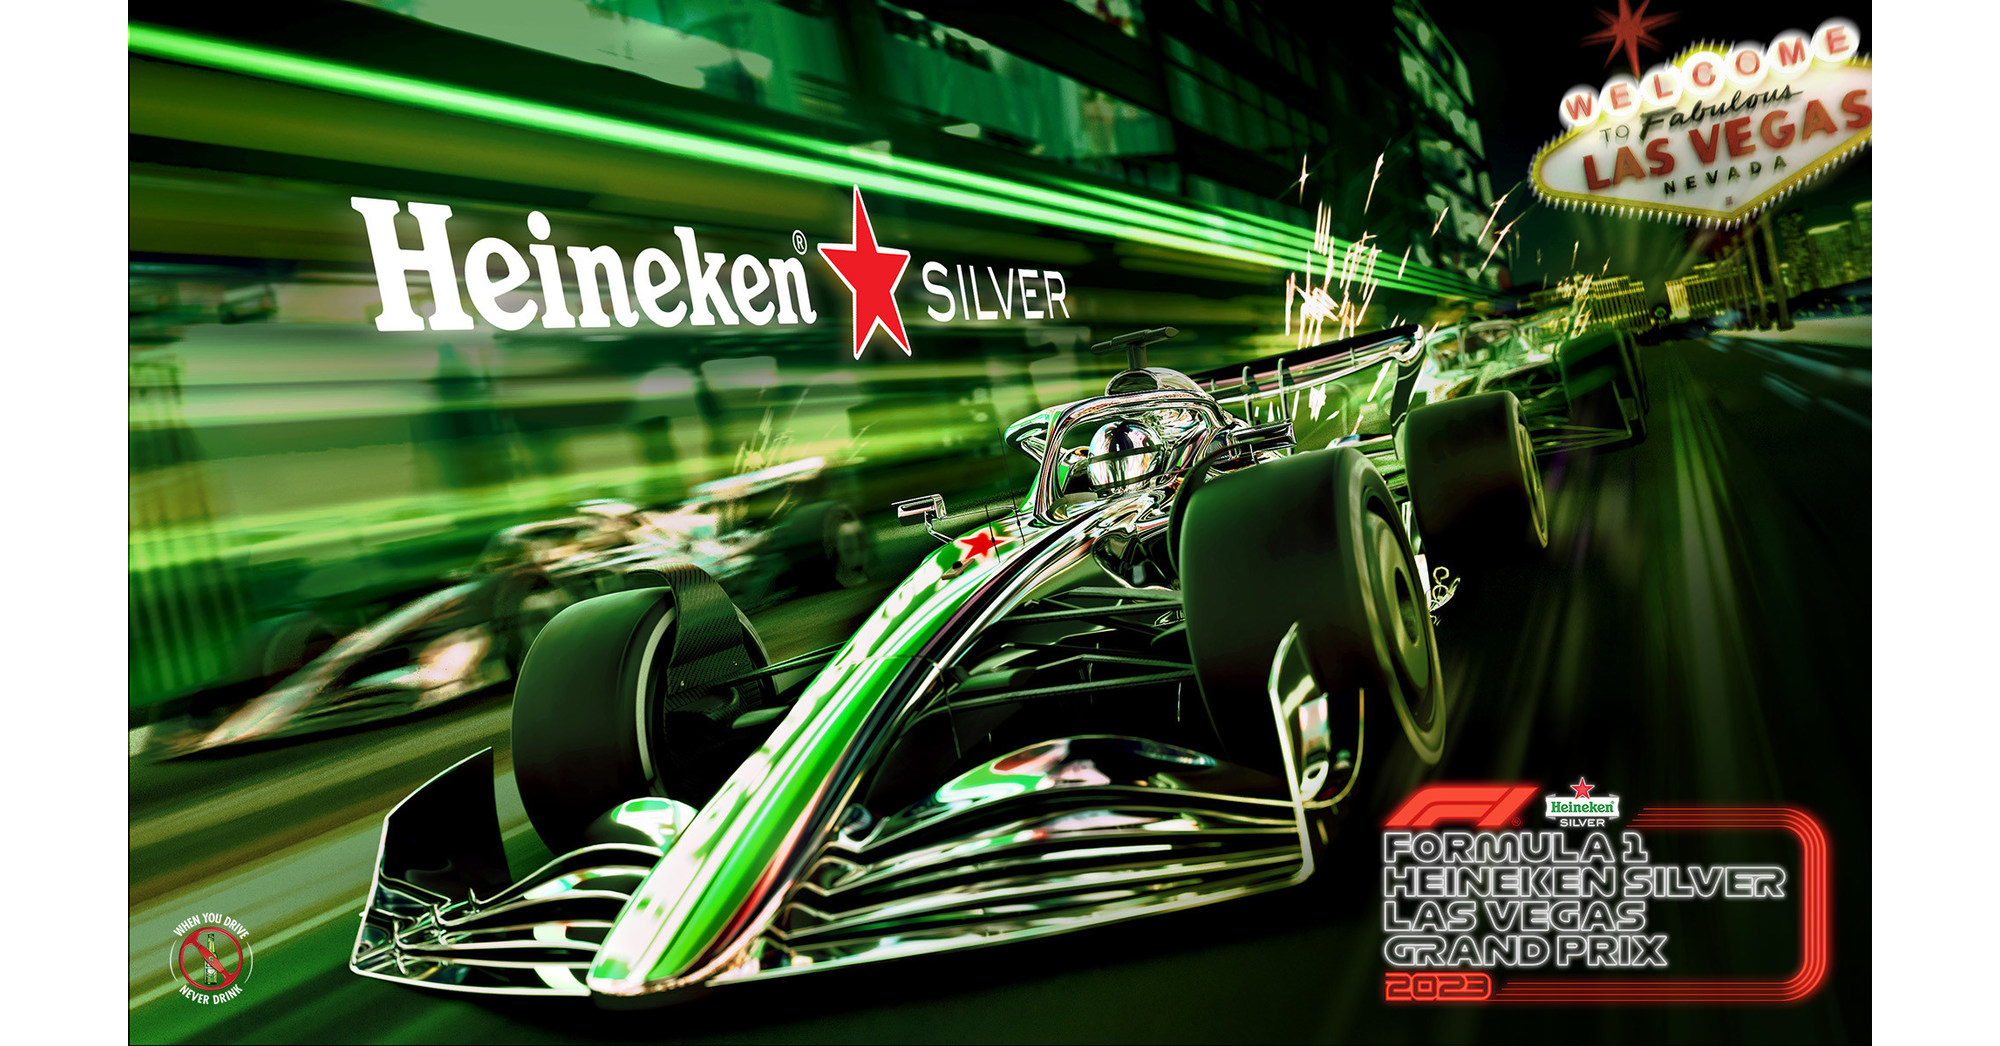 The Heineken Trophy for the Dutch GP this weekend. : r/formula1